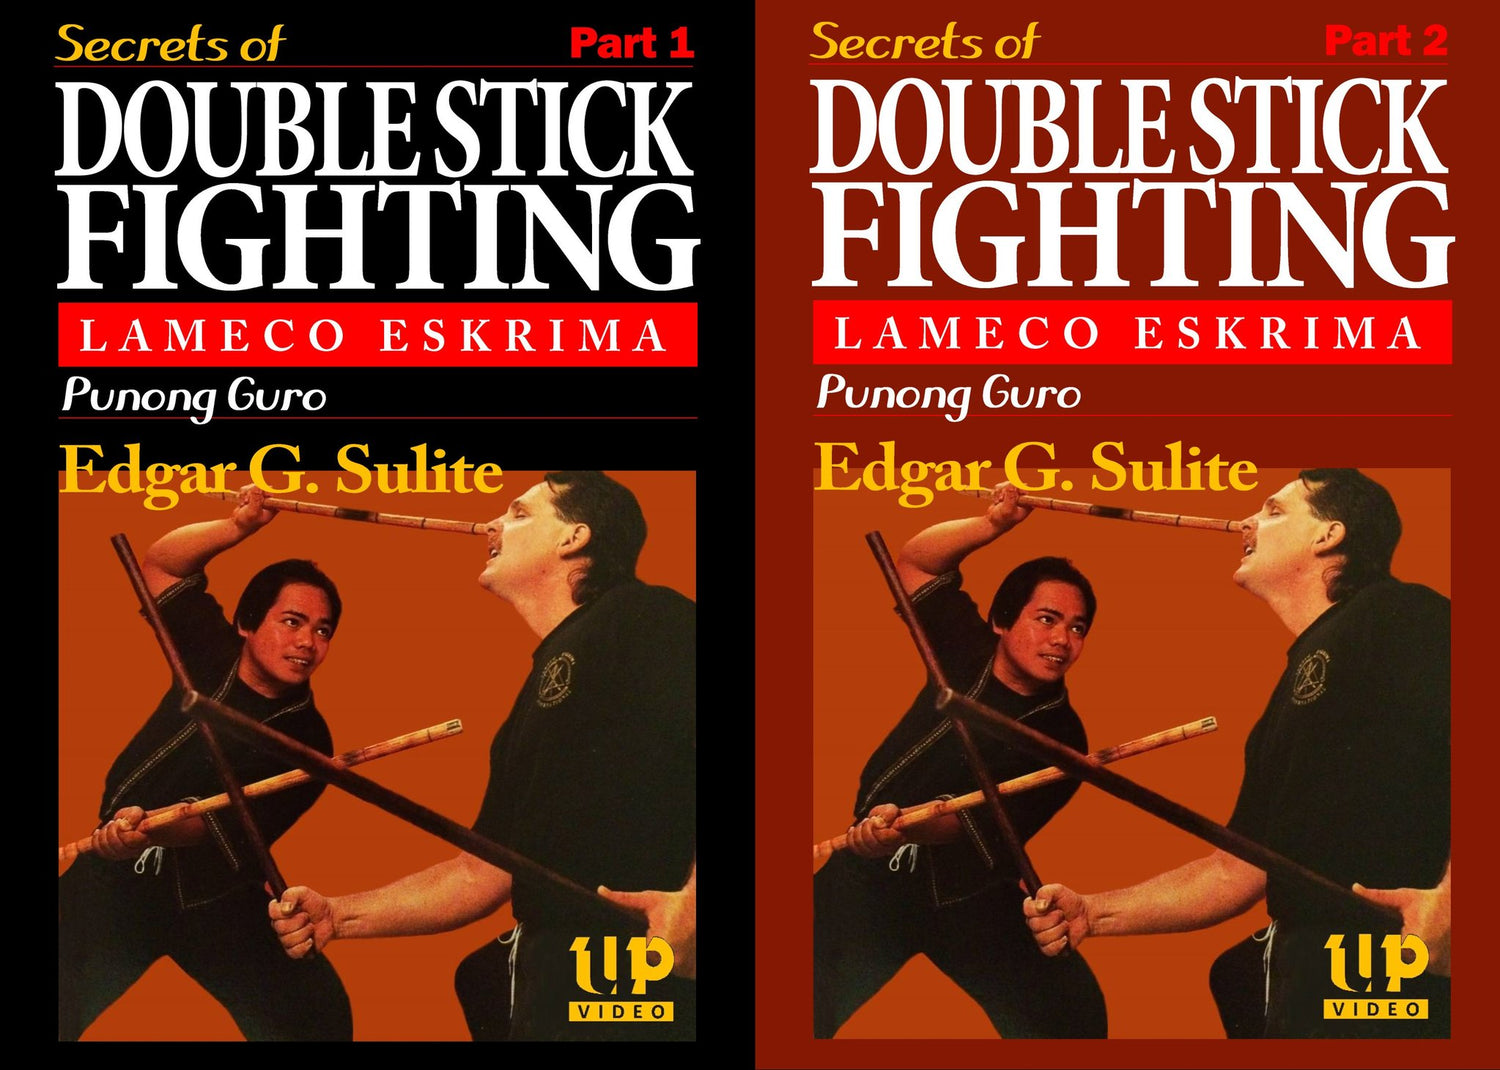 Lameco Eskrima Secrets of Double Stick Fighting 2 DVD Set by Edgar Sulite - Budovideos